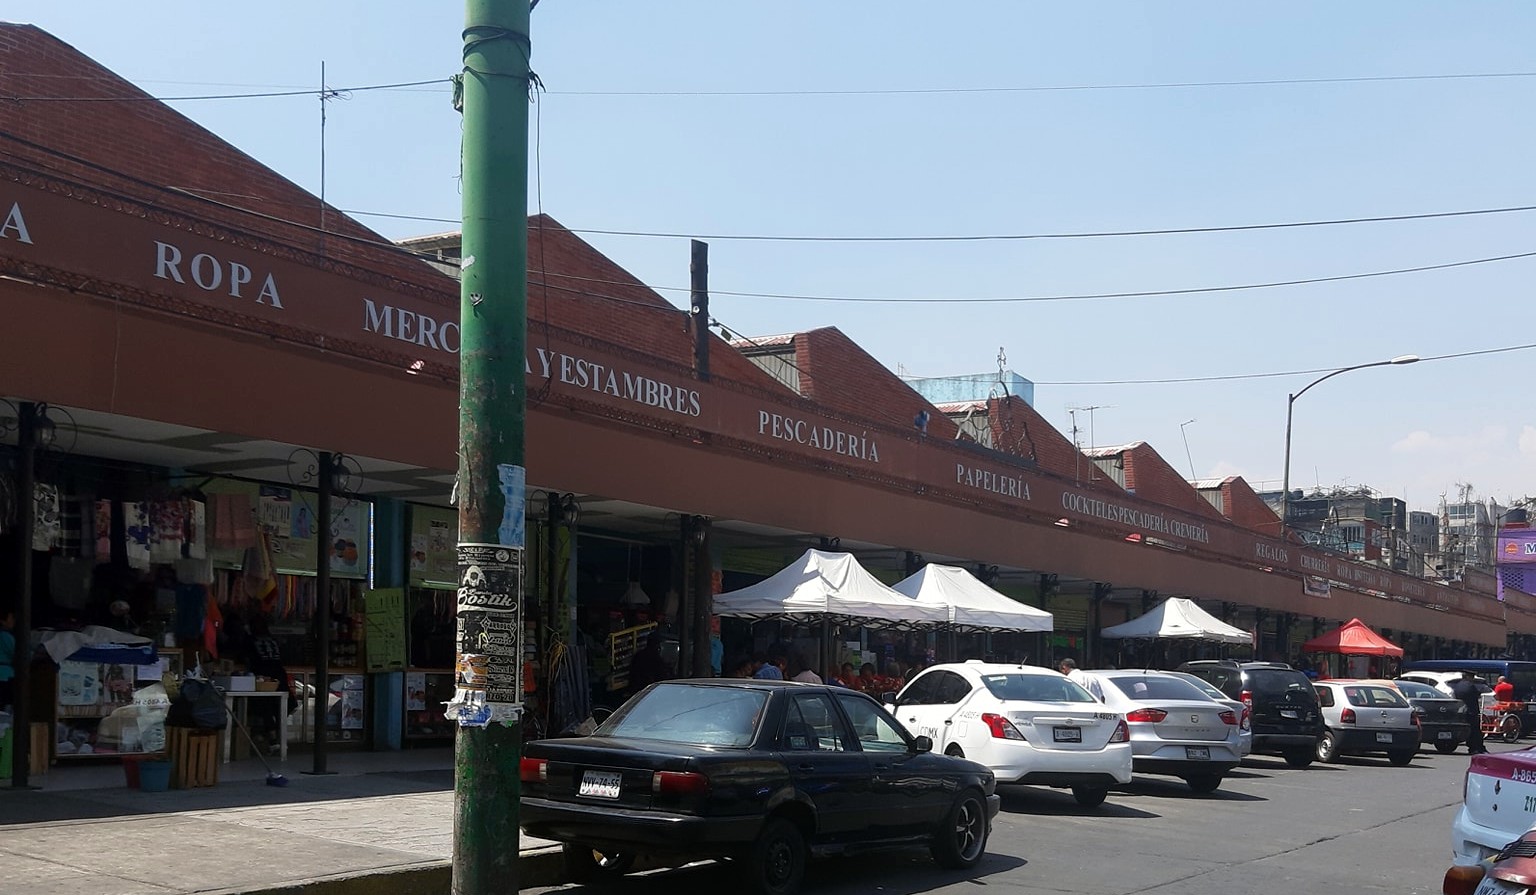 Mercado de Mixcoac: One of Mexico City's great gourmet markets